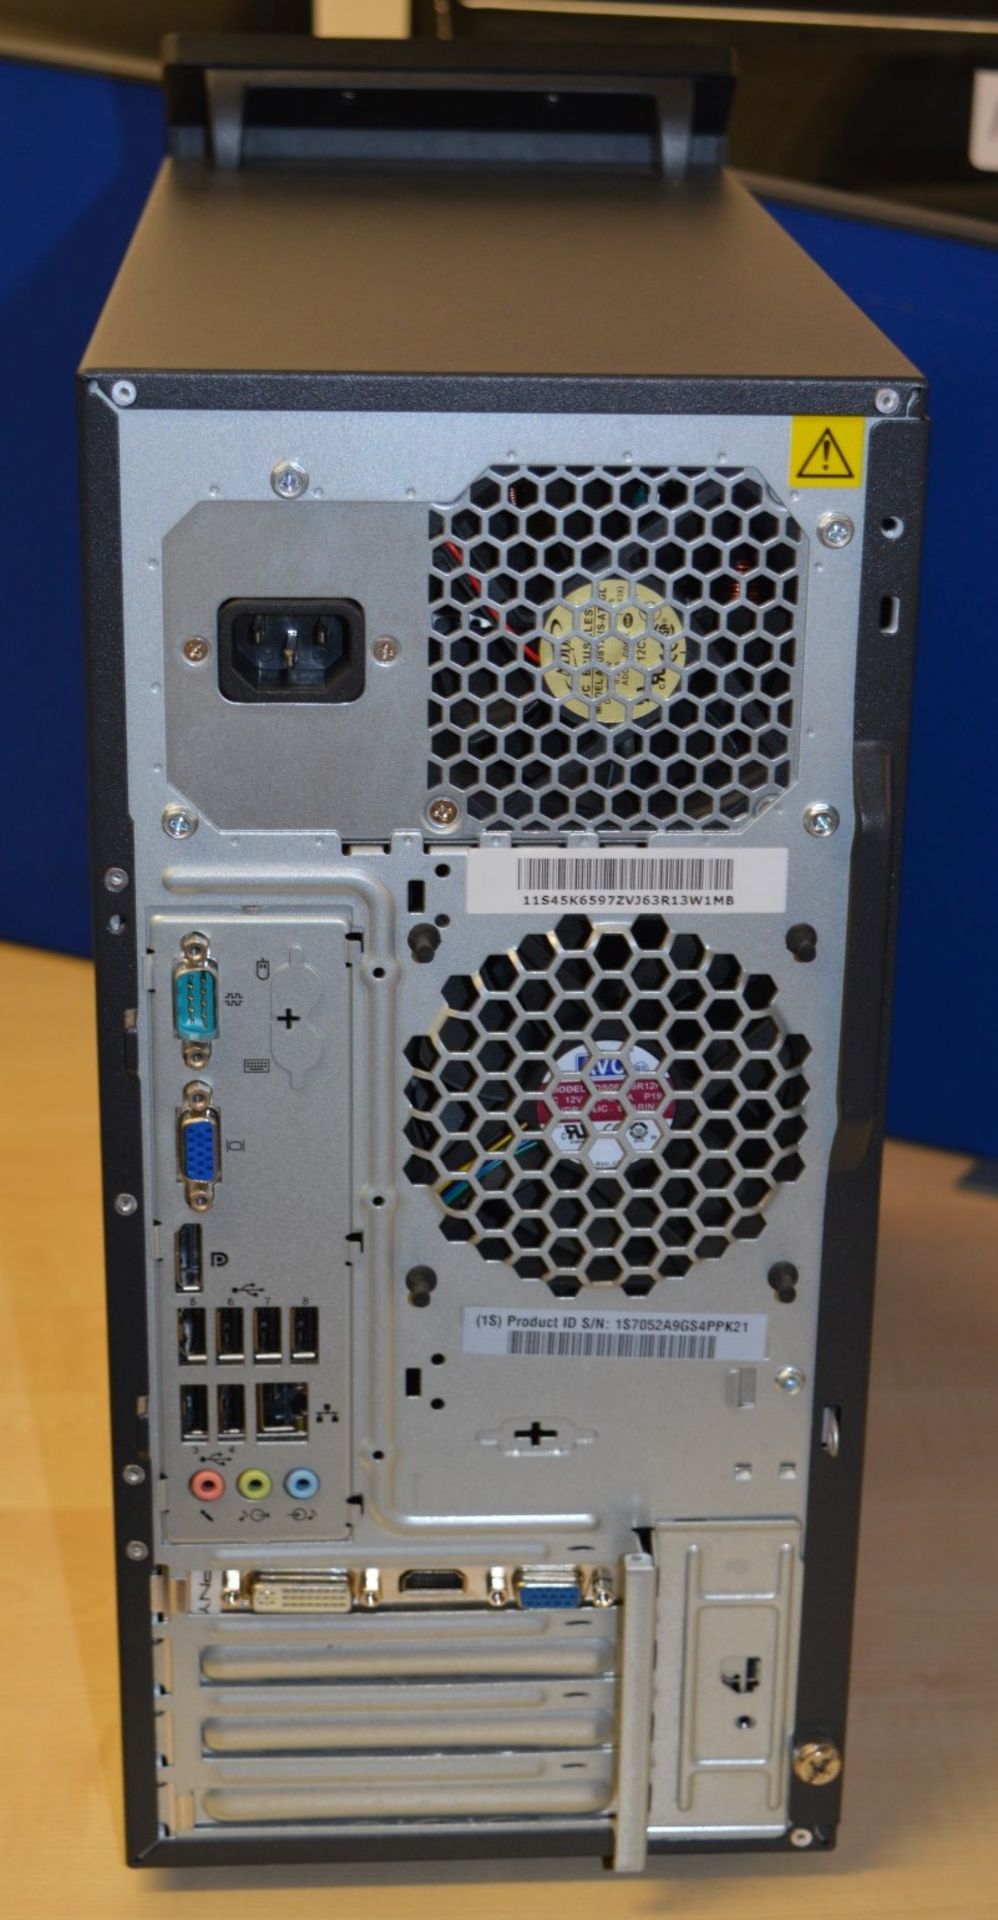 1 x Lenovo Thinkcentre M91p Desktop Computer - Intel Core i5 2400 3.1ghz Quad Core Processor - - Image 6 of 7